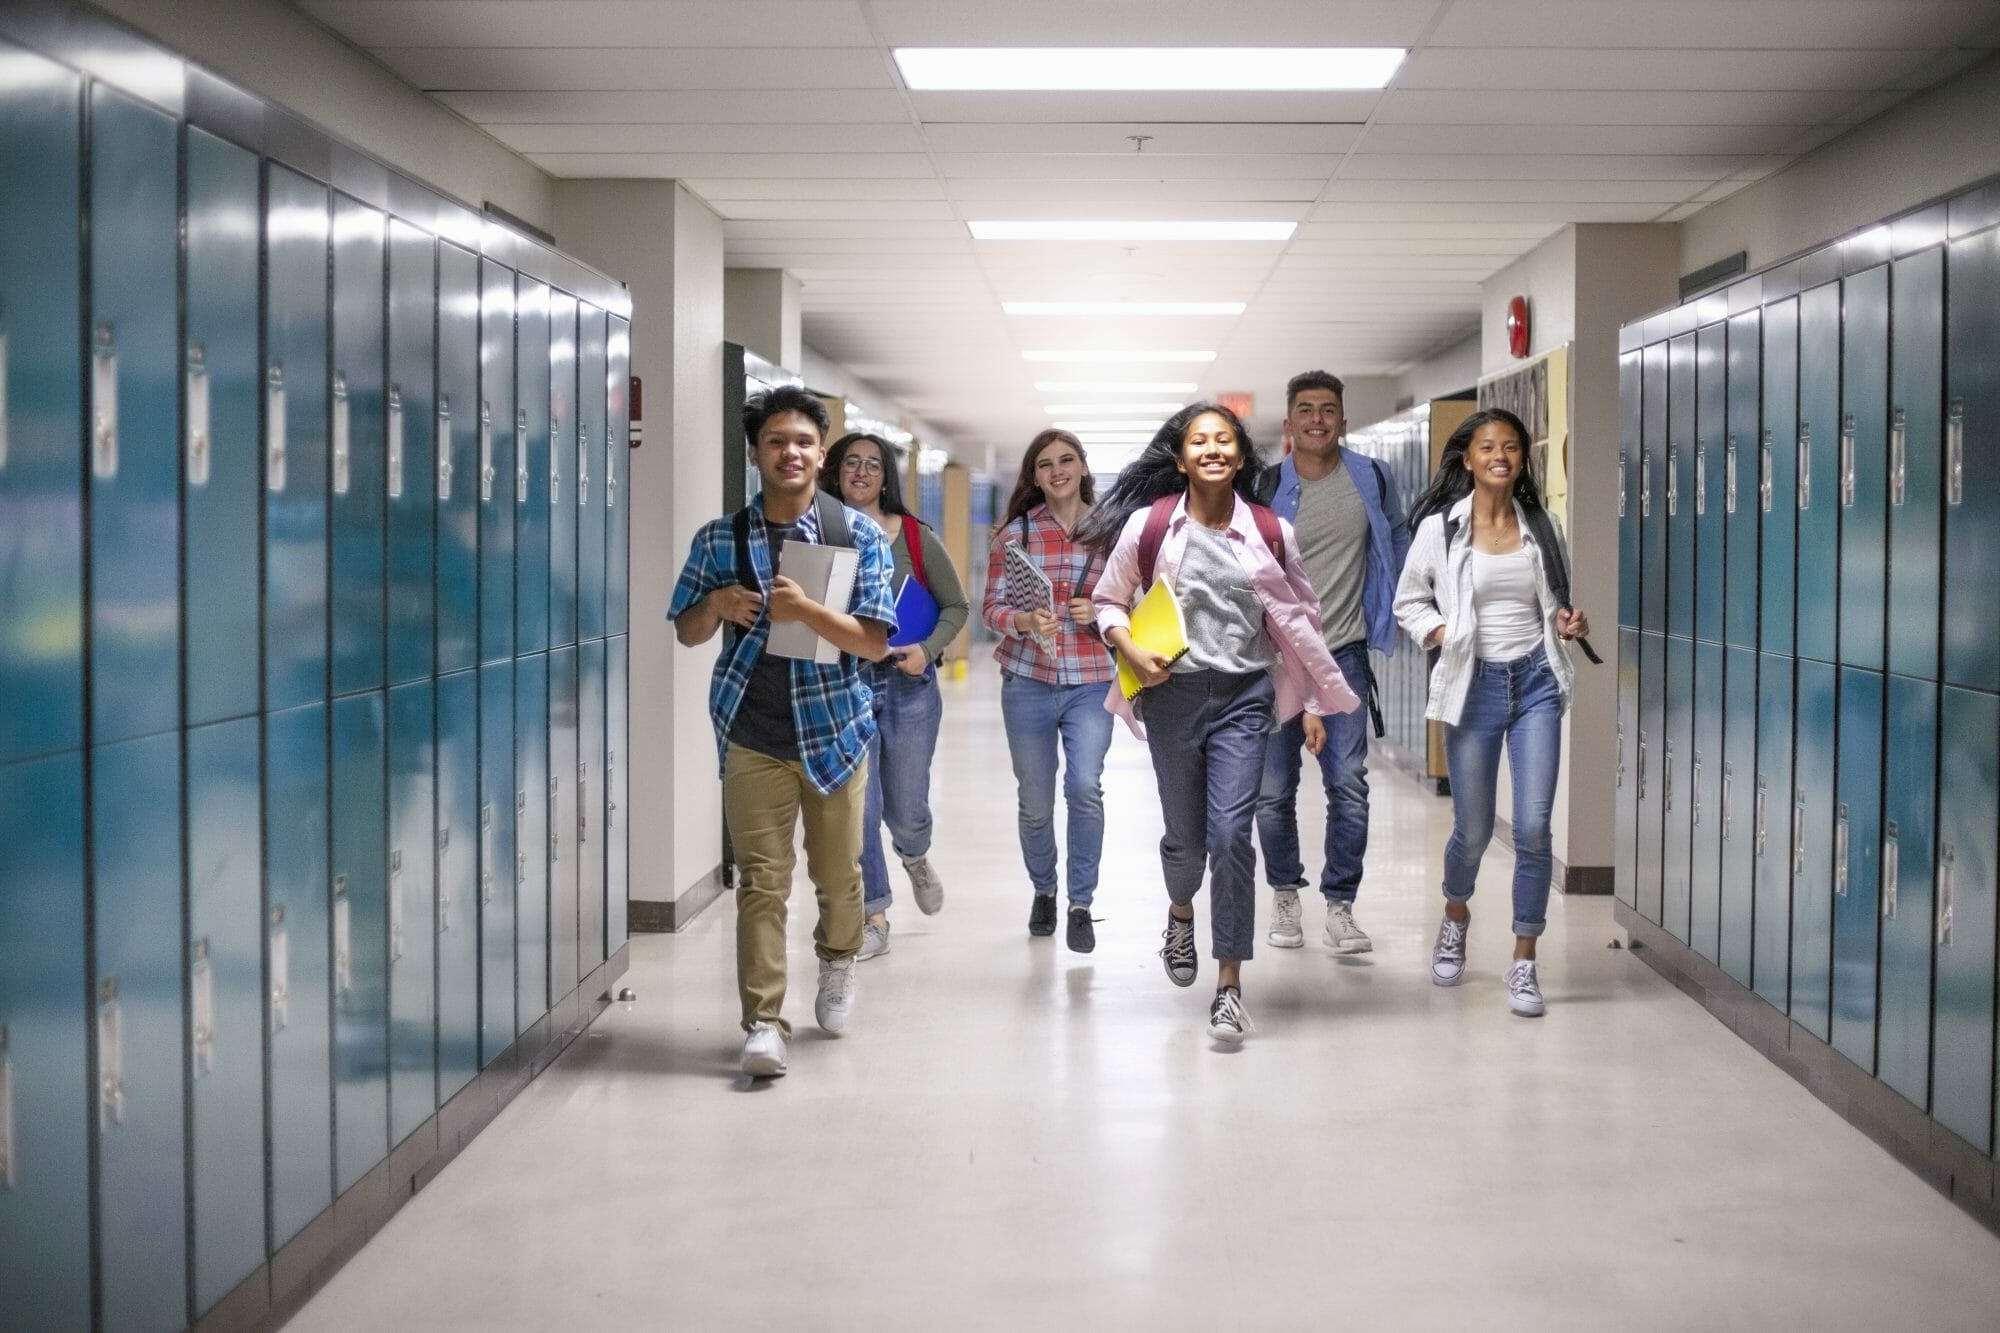 groups of teens walking down a locker-lined hallway